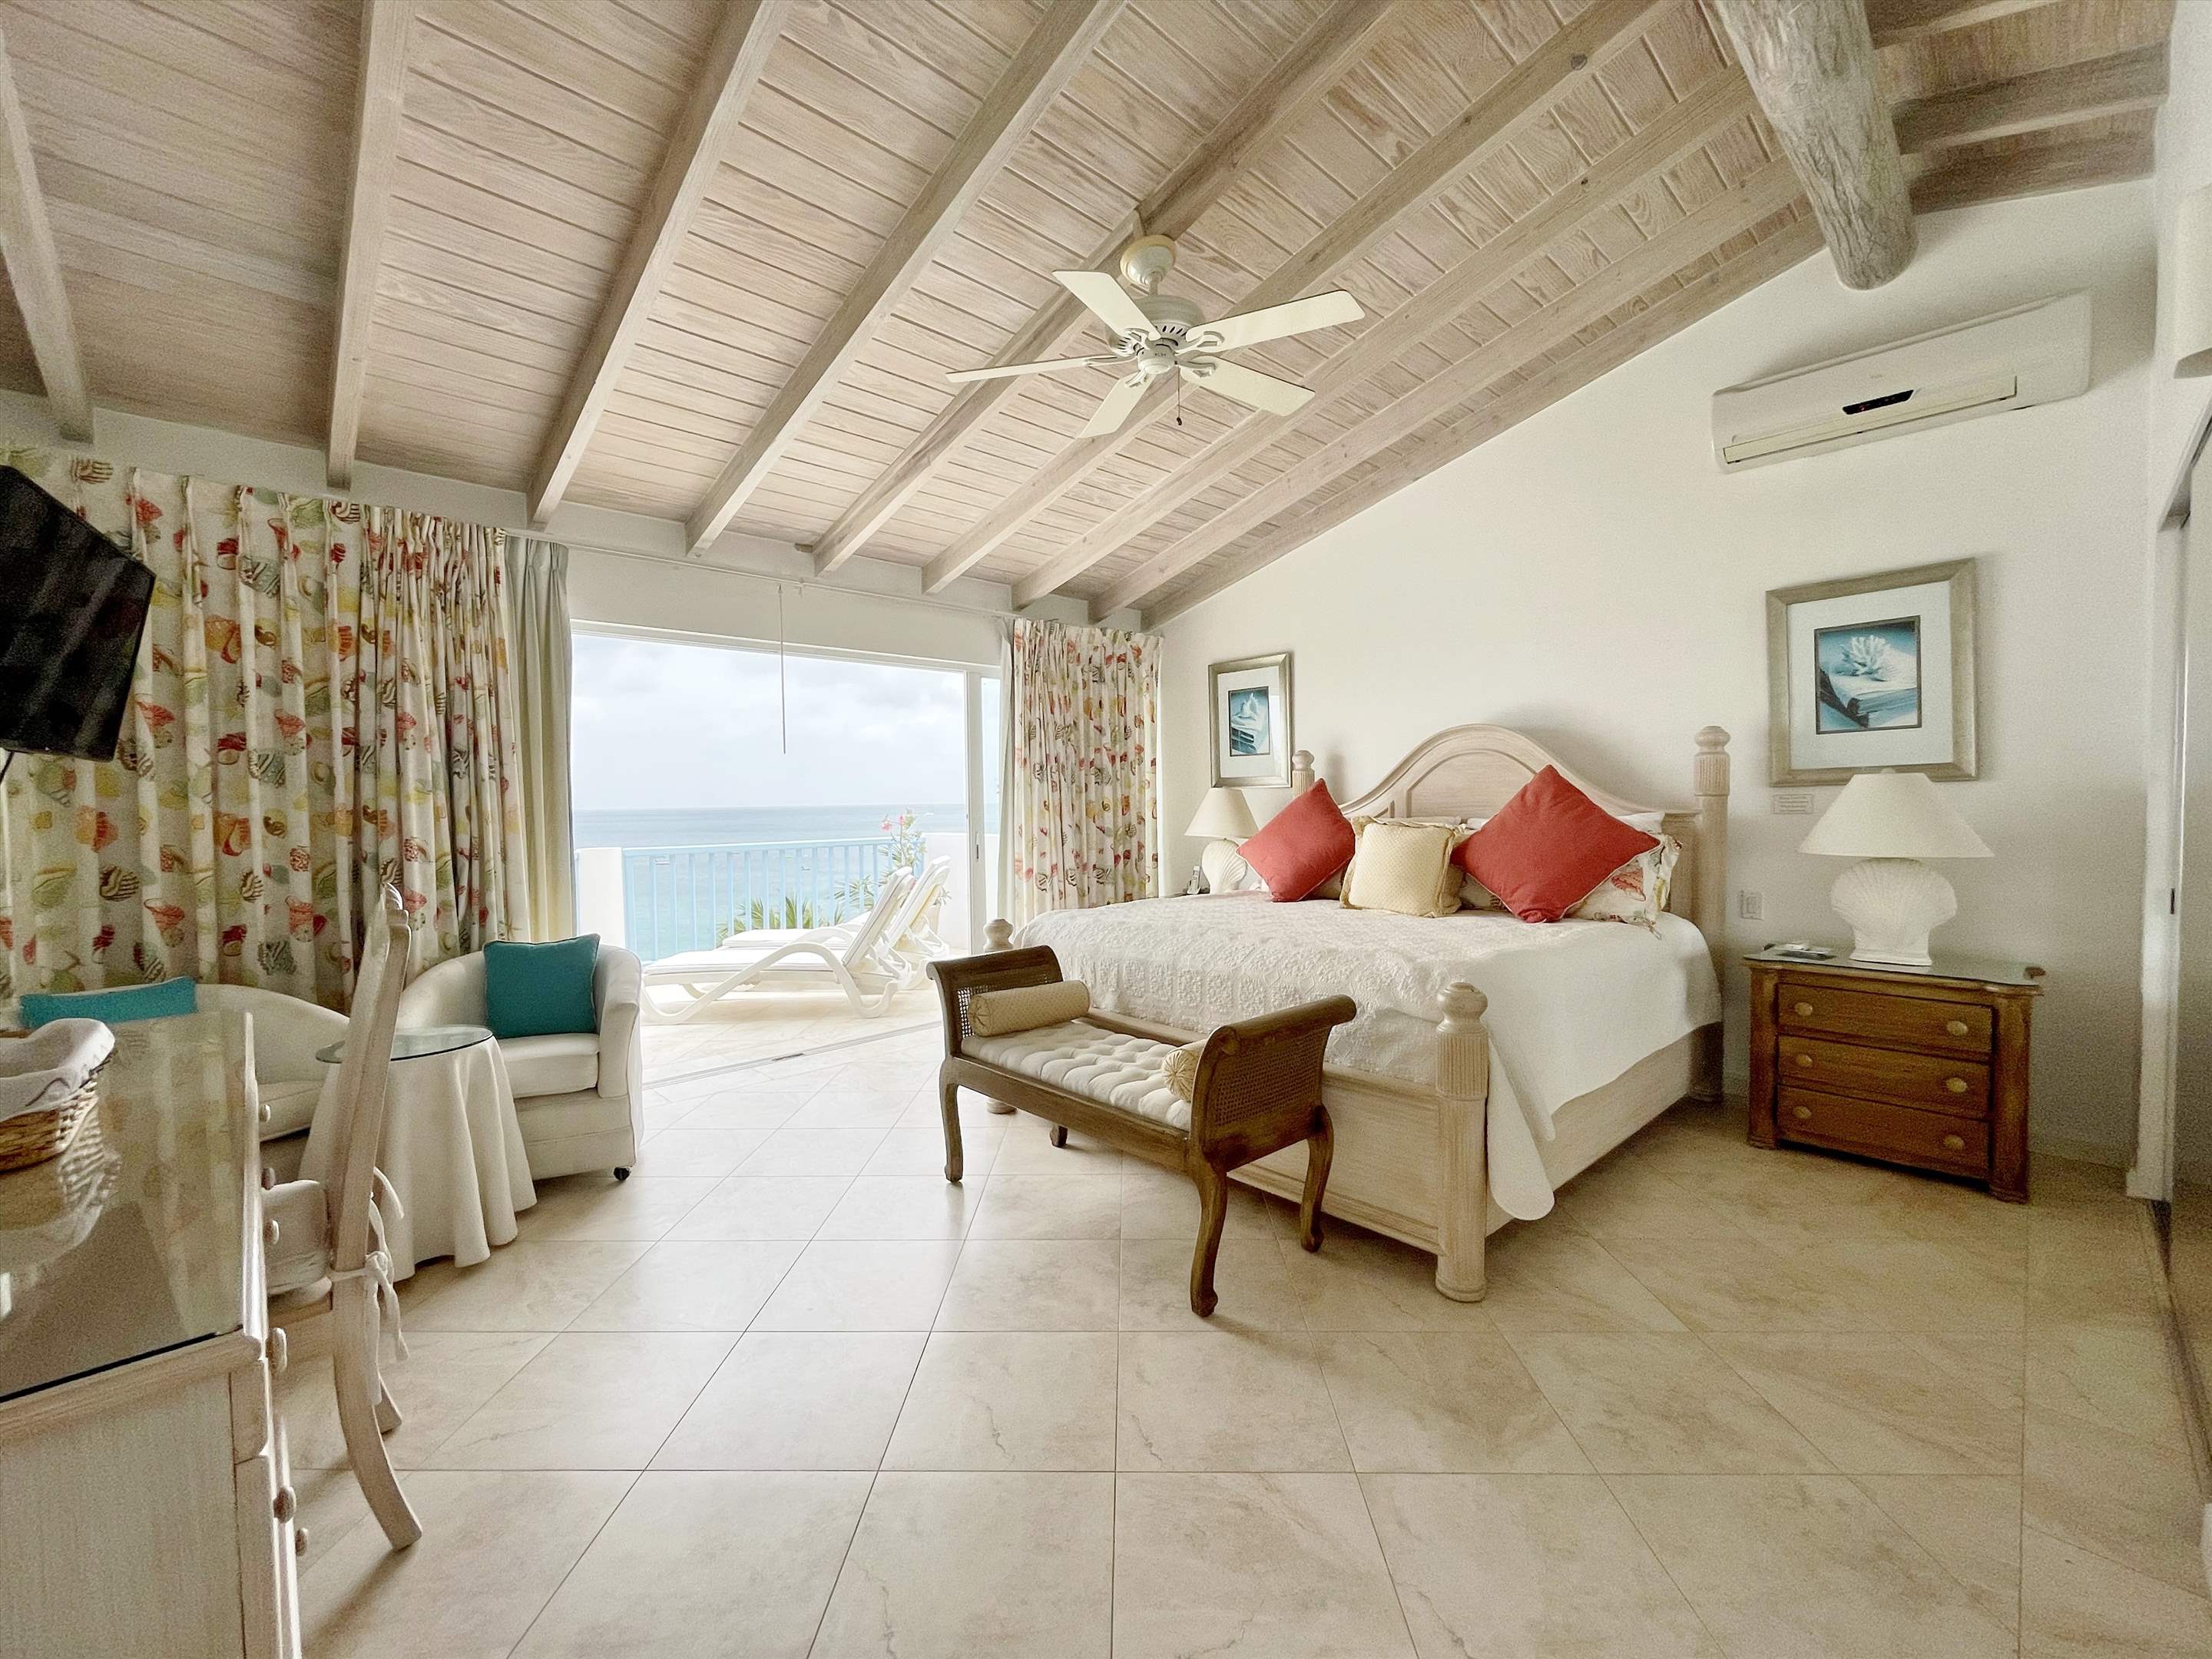 Villas on the Beach 403, 3 bedroom, 3 bedroom apartment in St. James & West Coast, Barbados Photo #17